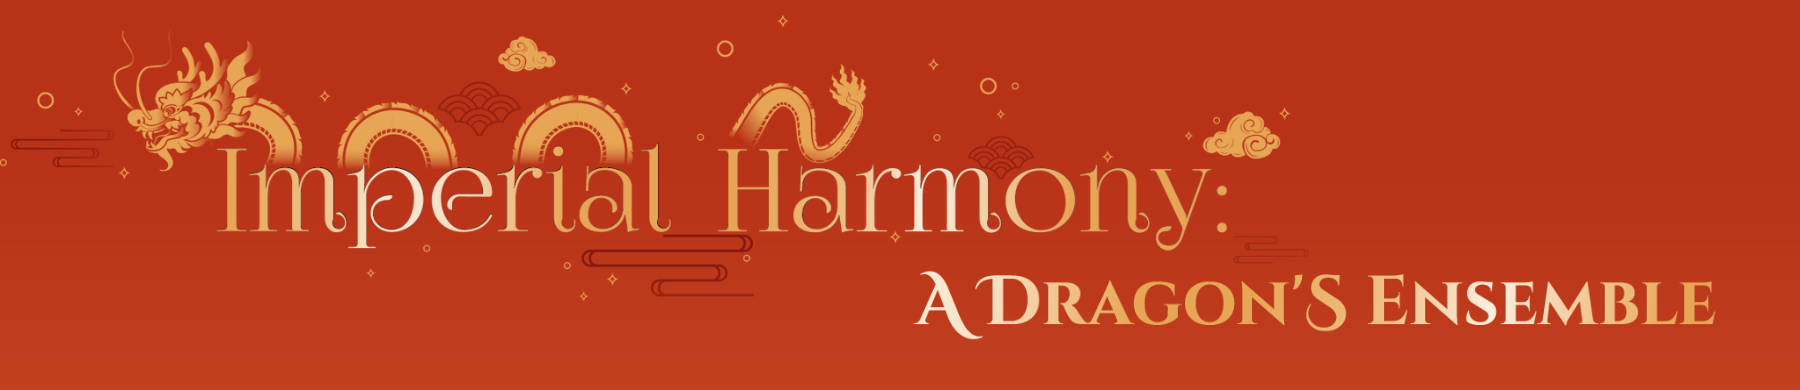 Imperial Harmony, A Dragons Ensemble